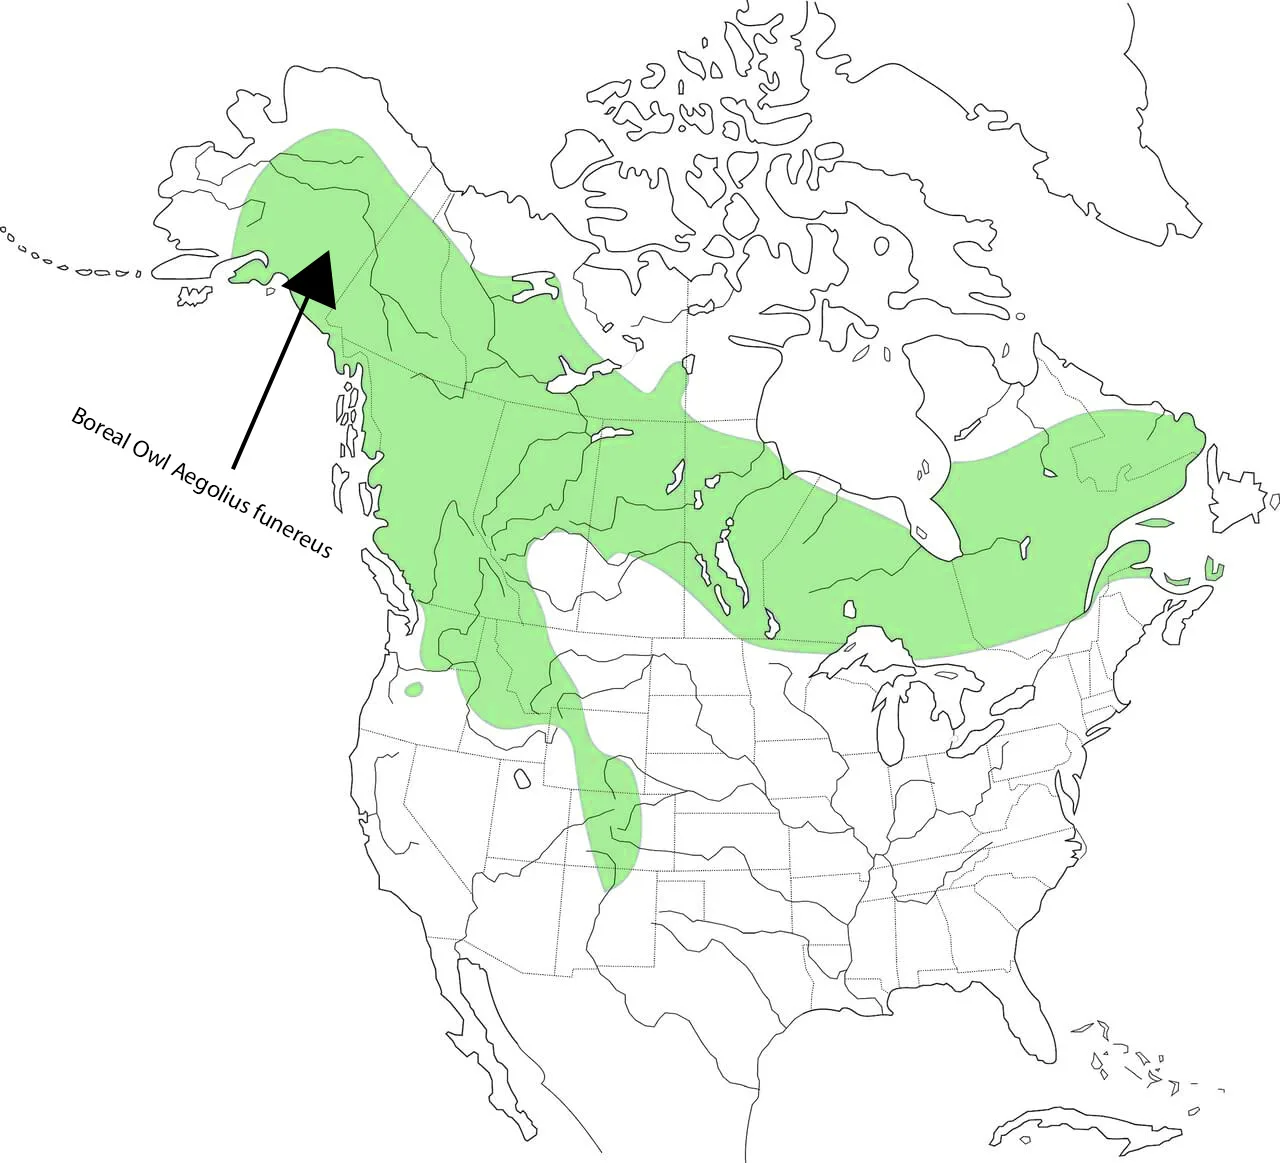 Boreal Owl Aegolius funereus range map